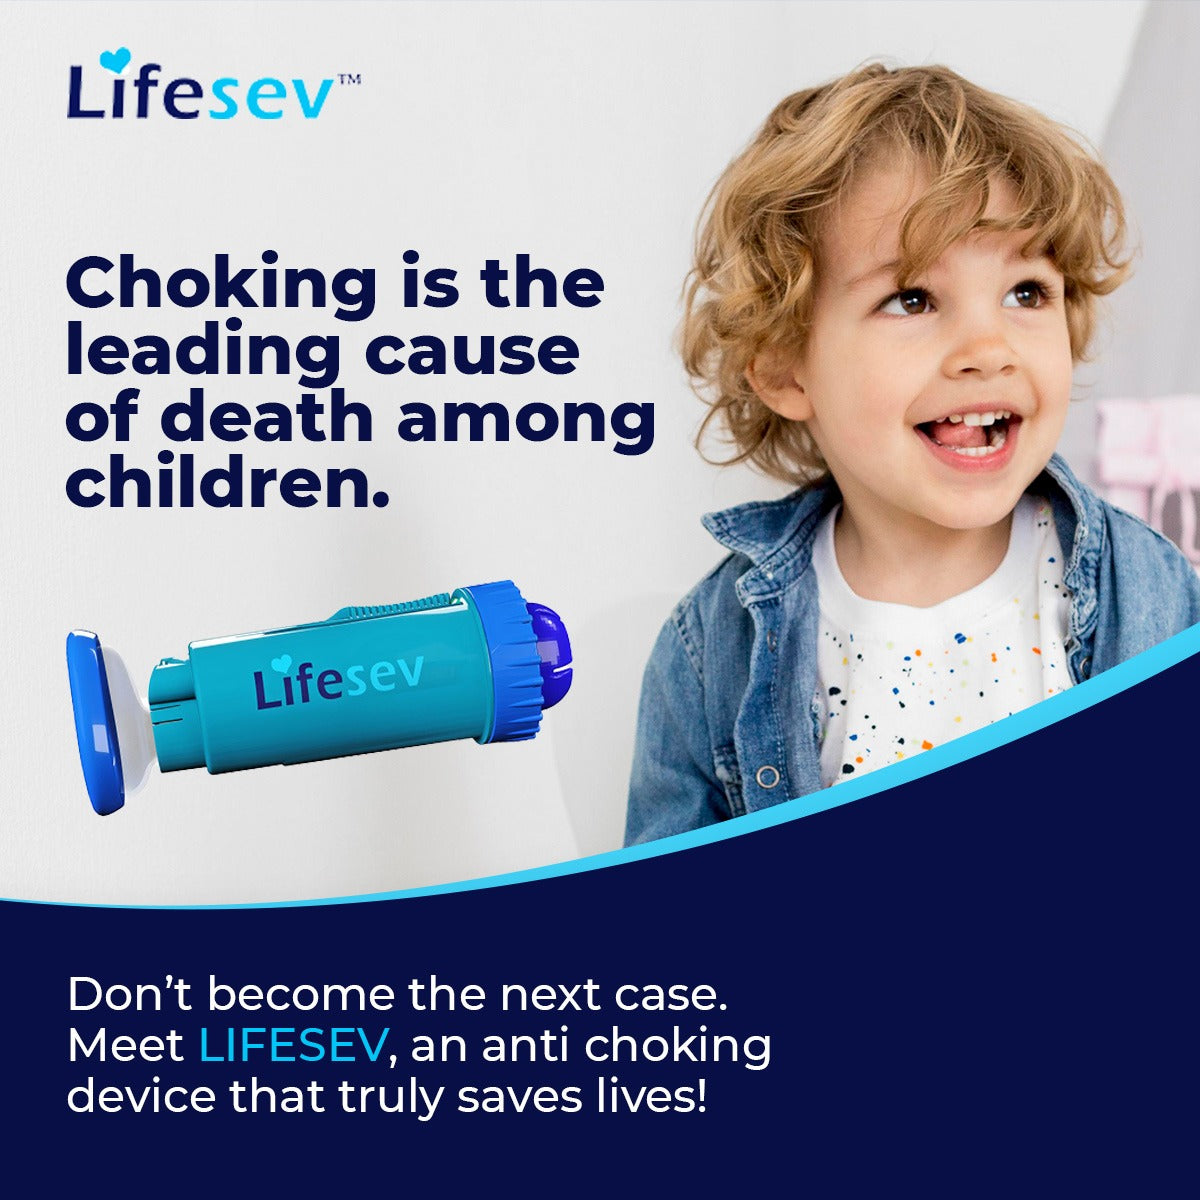 LIFESEV™ ANTI CHOKING DEVICE THAT SAVES LIVES!